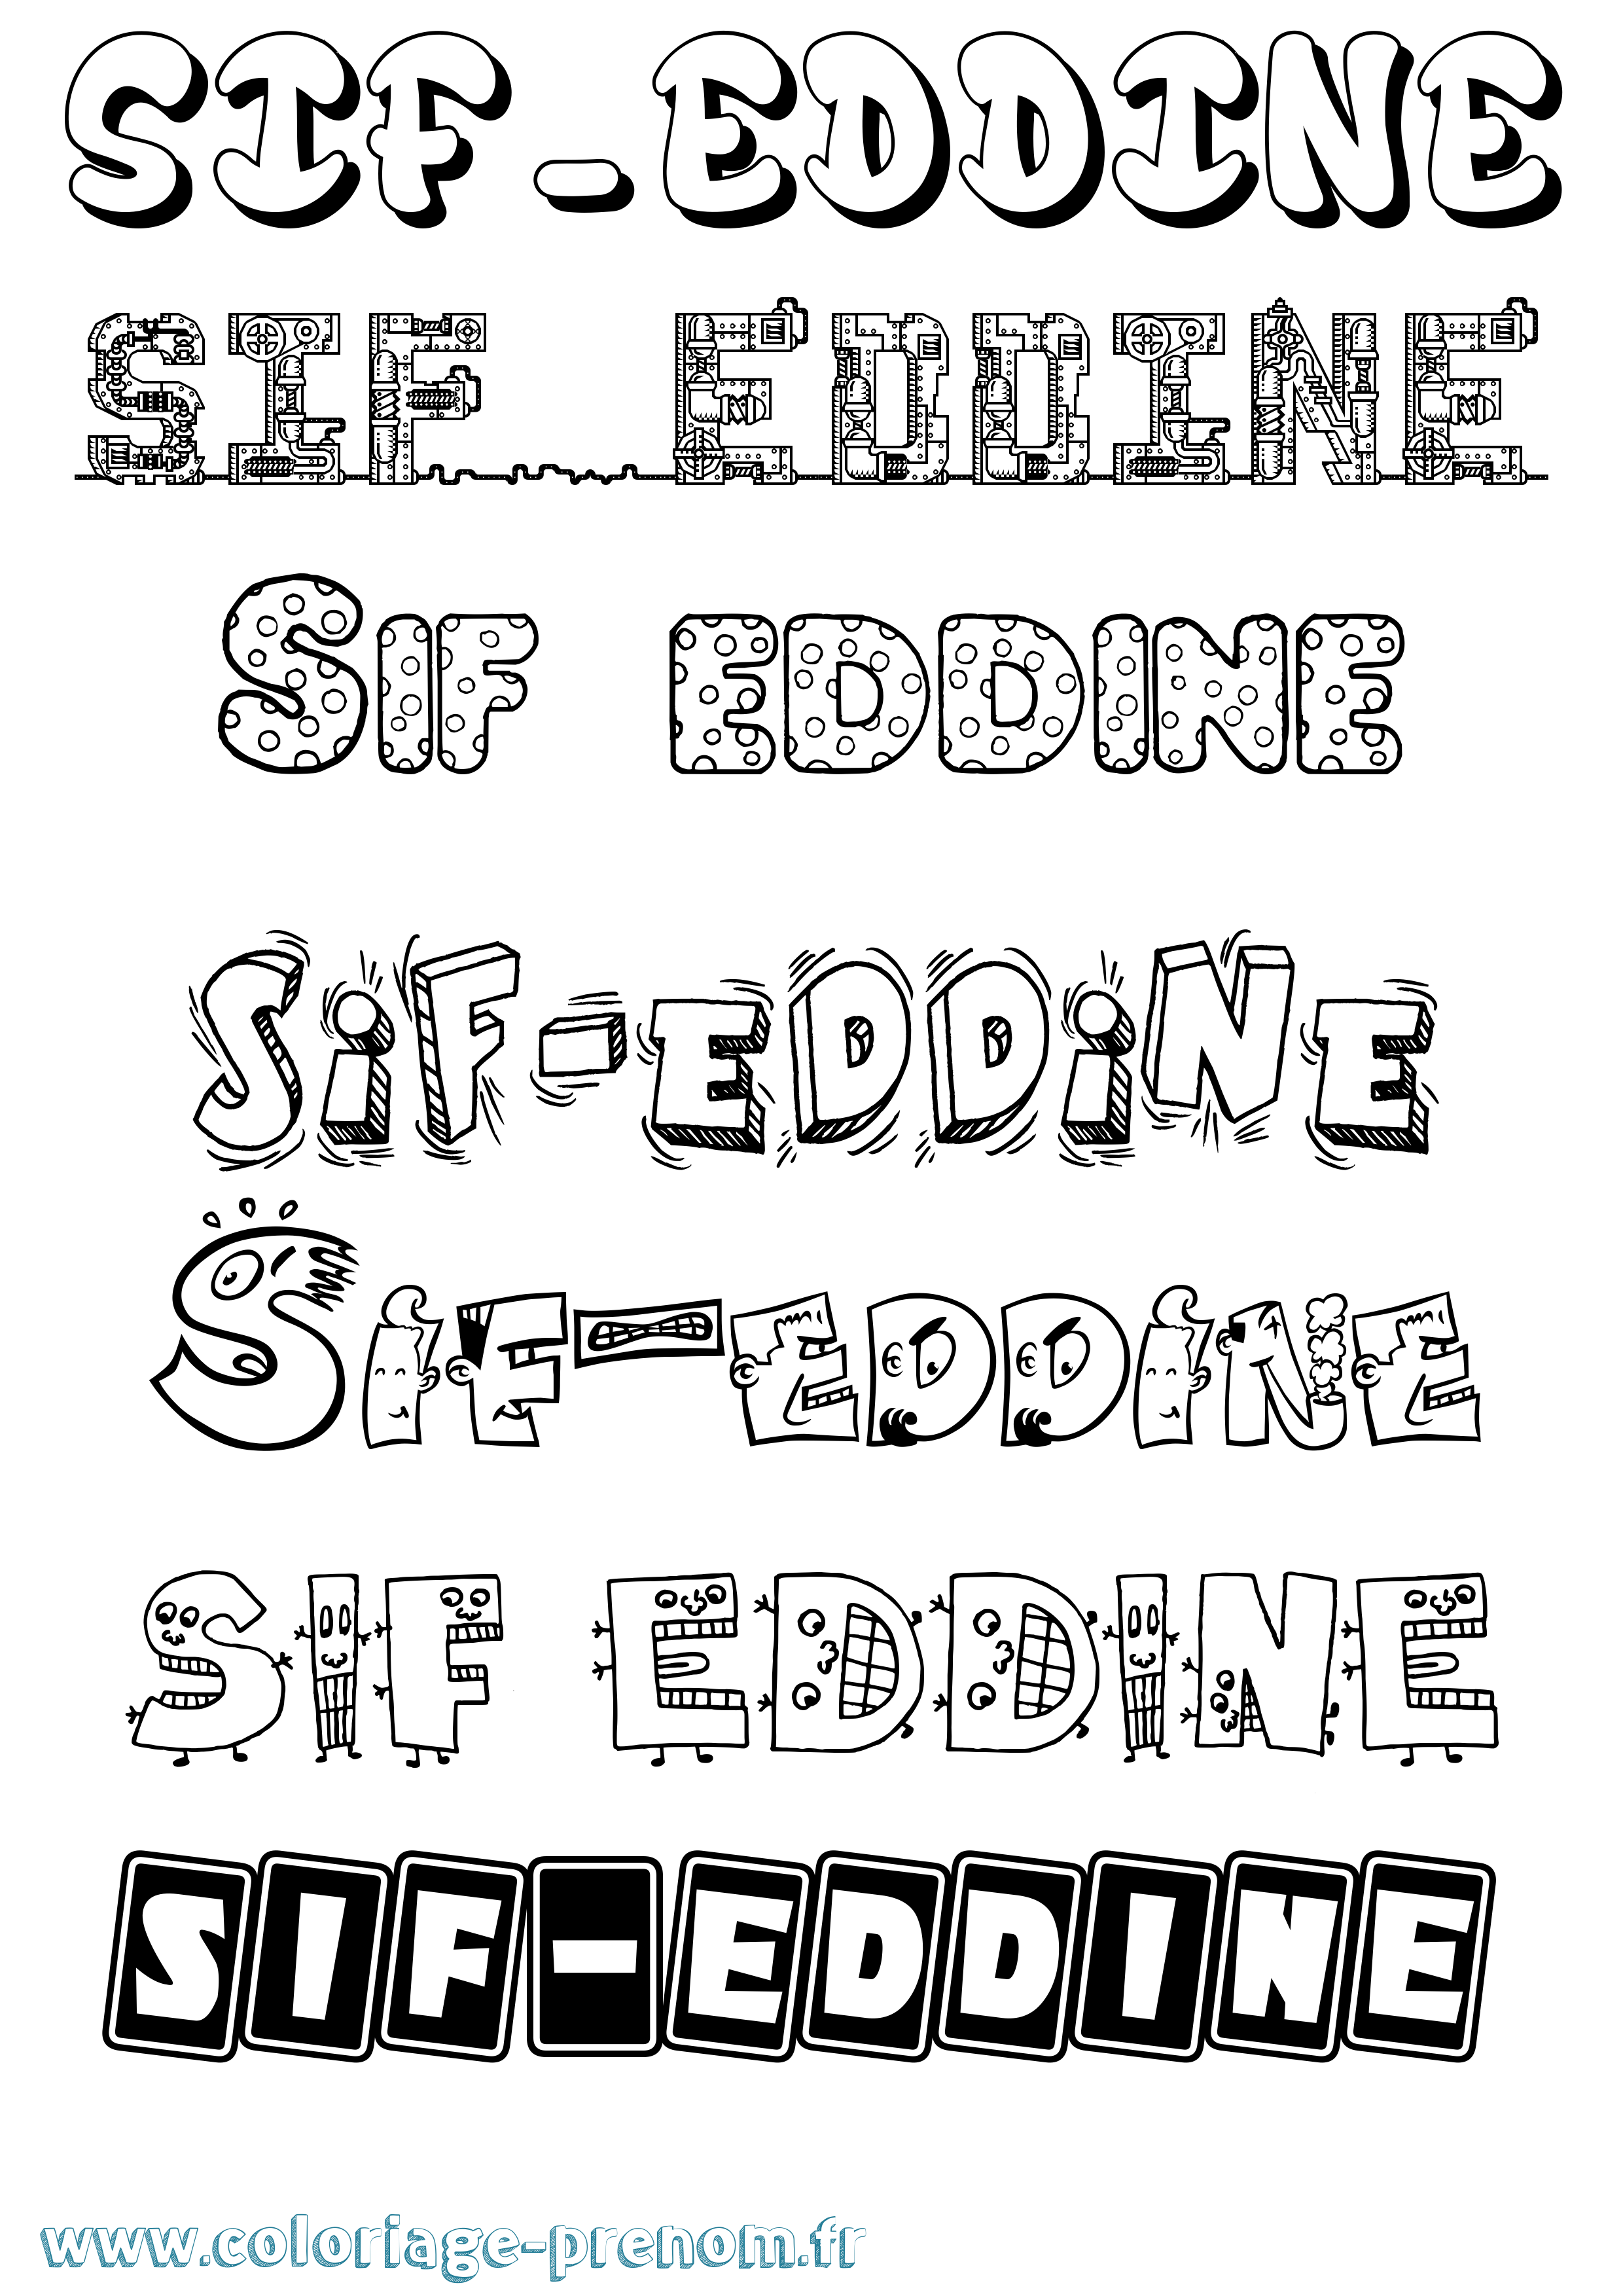 Coloriage prénom Sif-Eddine Fun